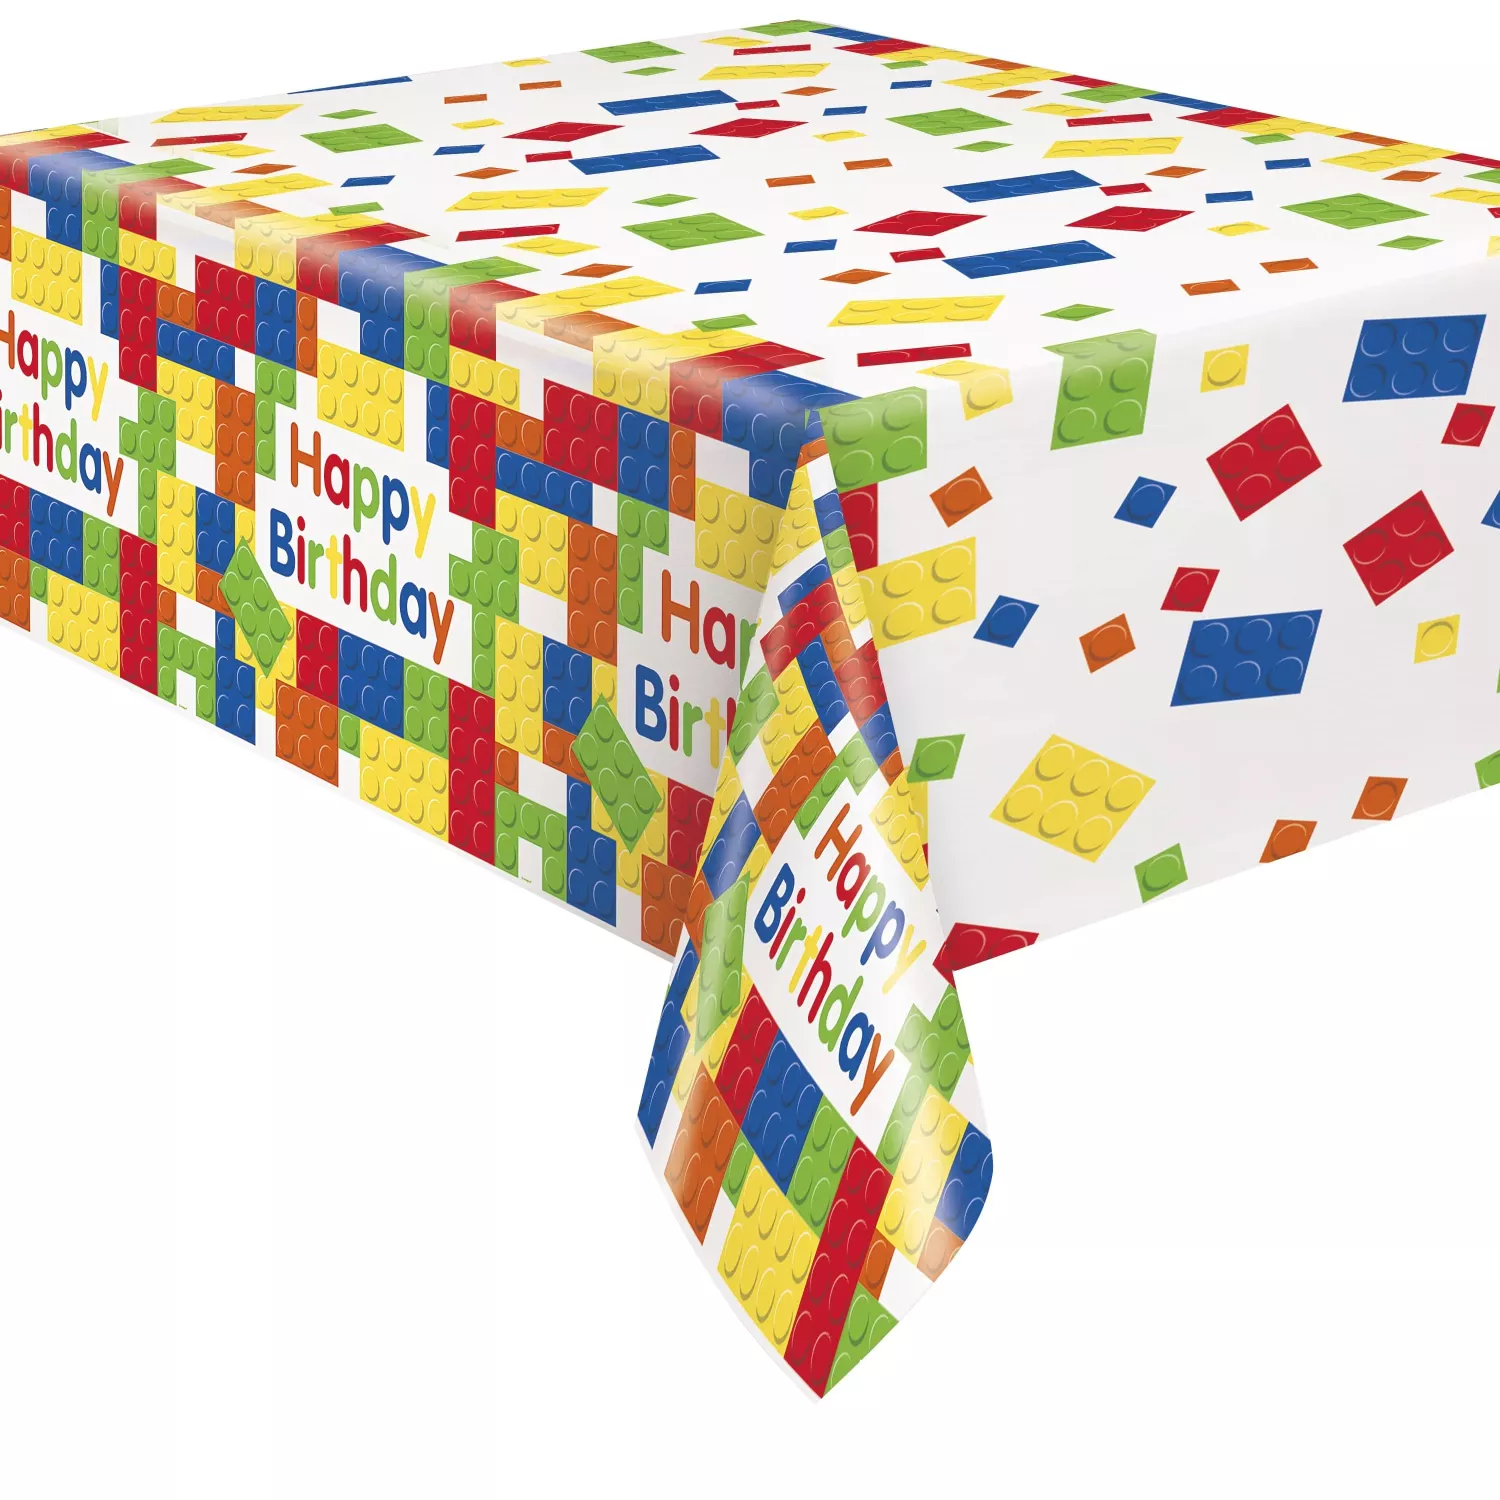 Plastduk Lego 137.16 cm x 213.36 cm